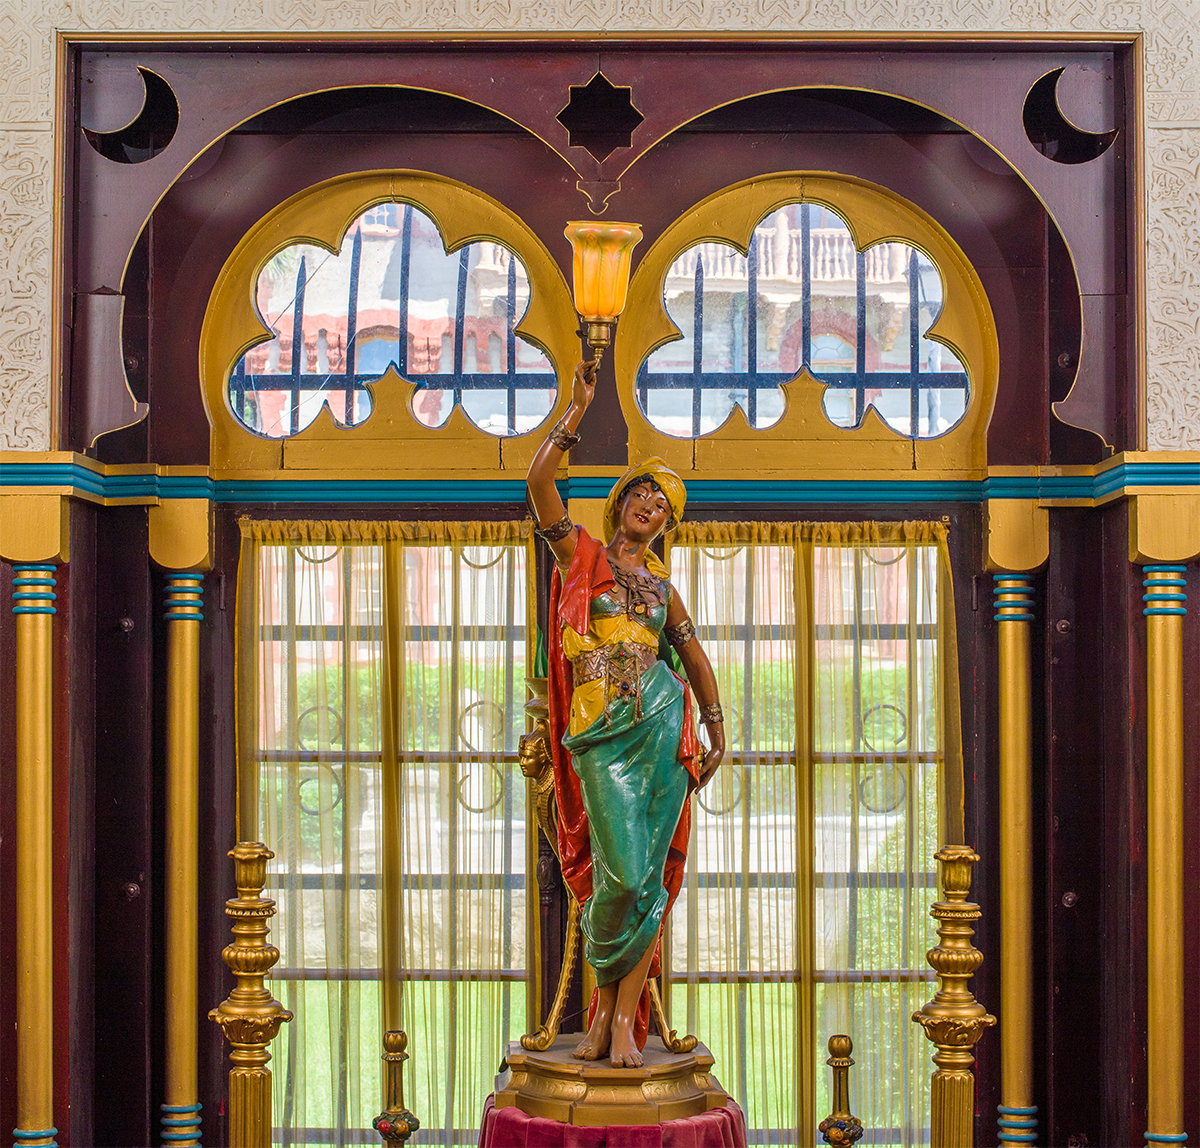 Painted statute of a woman inside the Villa Zorayda Museum